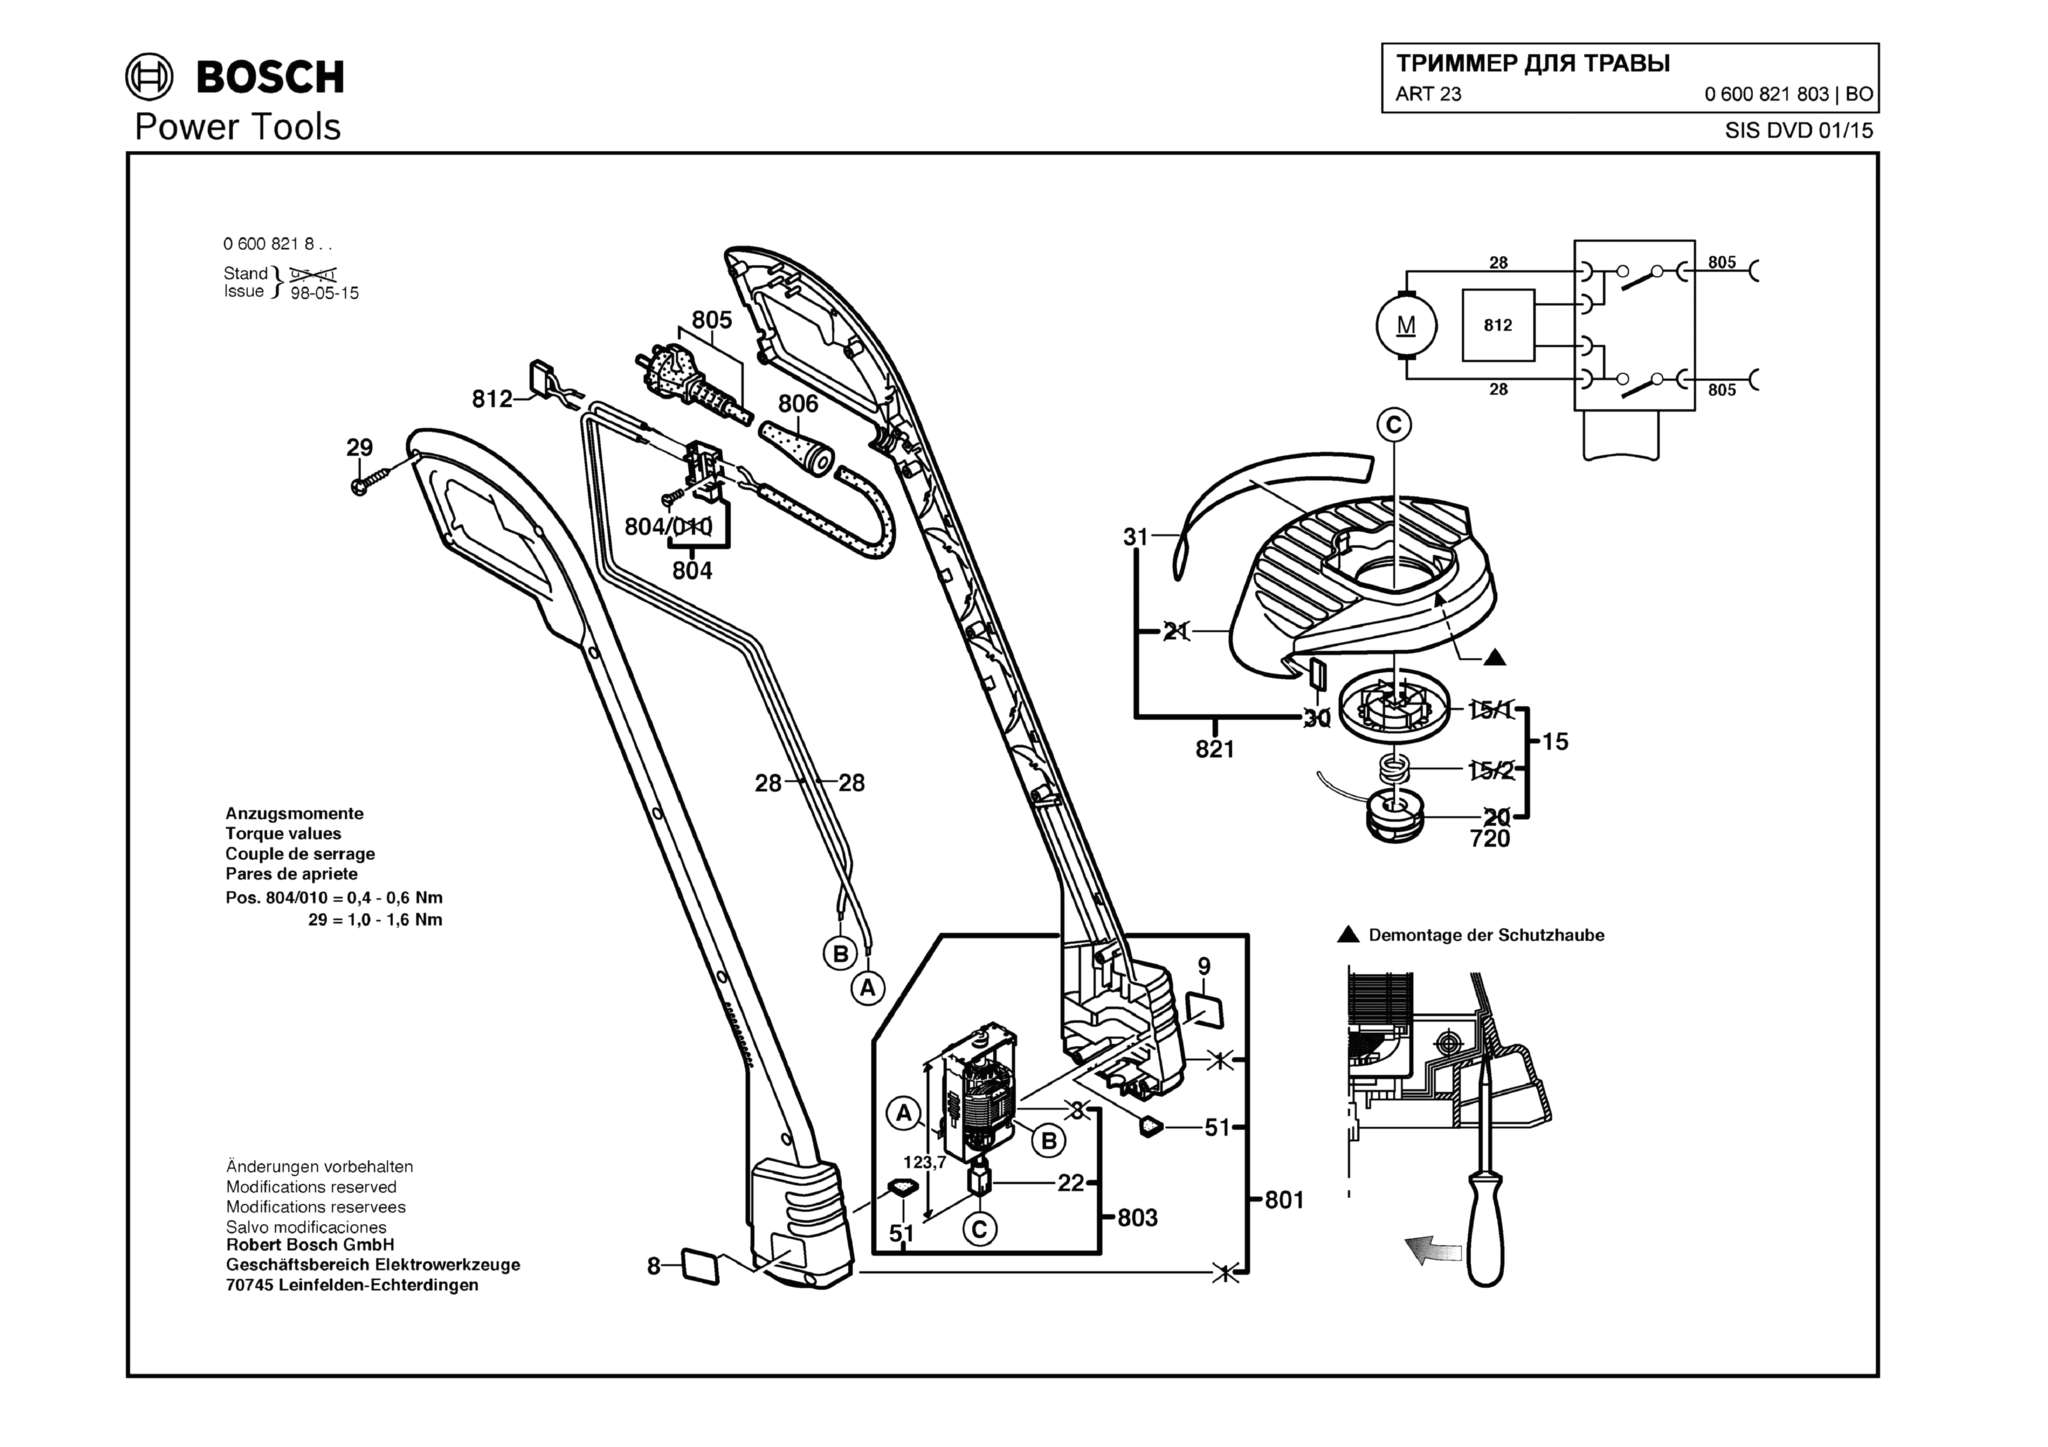 Запчасти, схема и деталировка Bosch ART 23 (ТИП 0600821803)